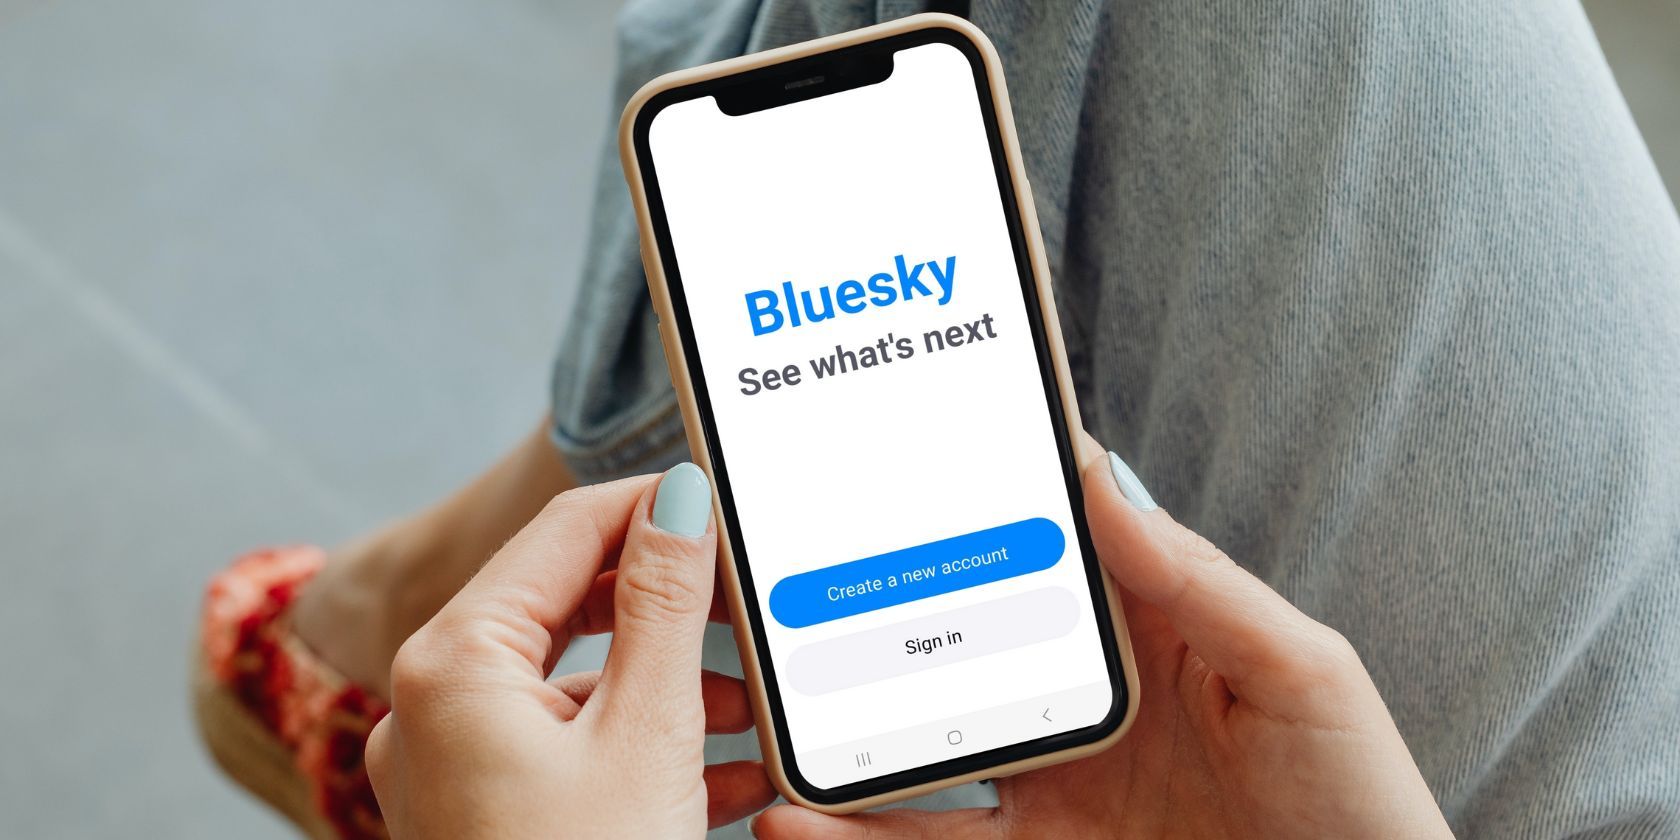 bluesky app on smartphone